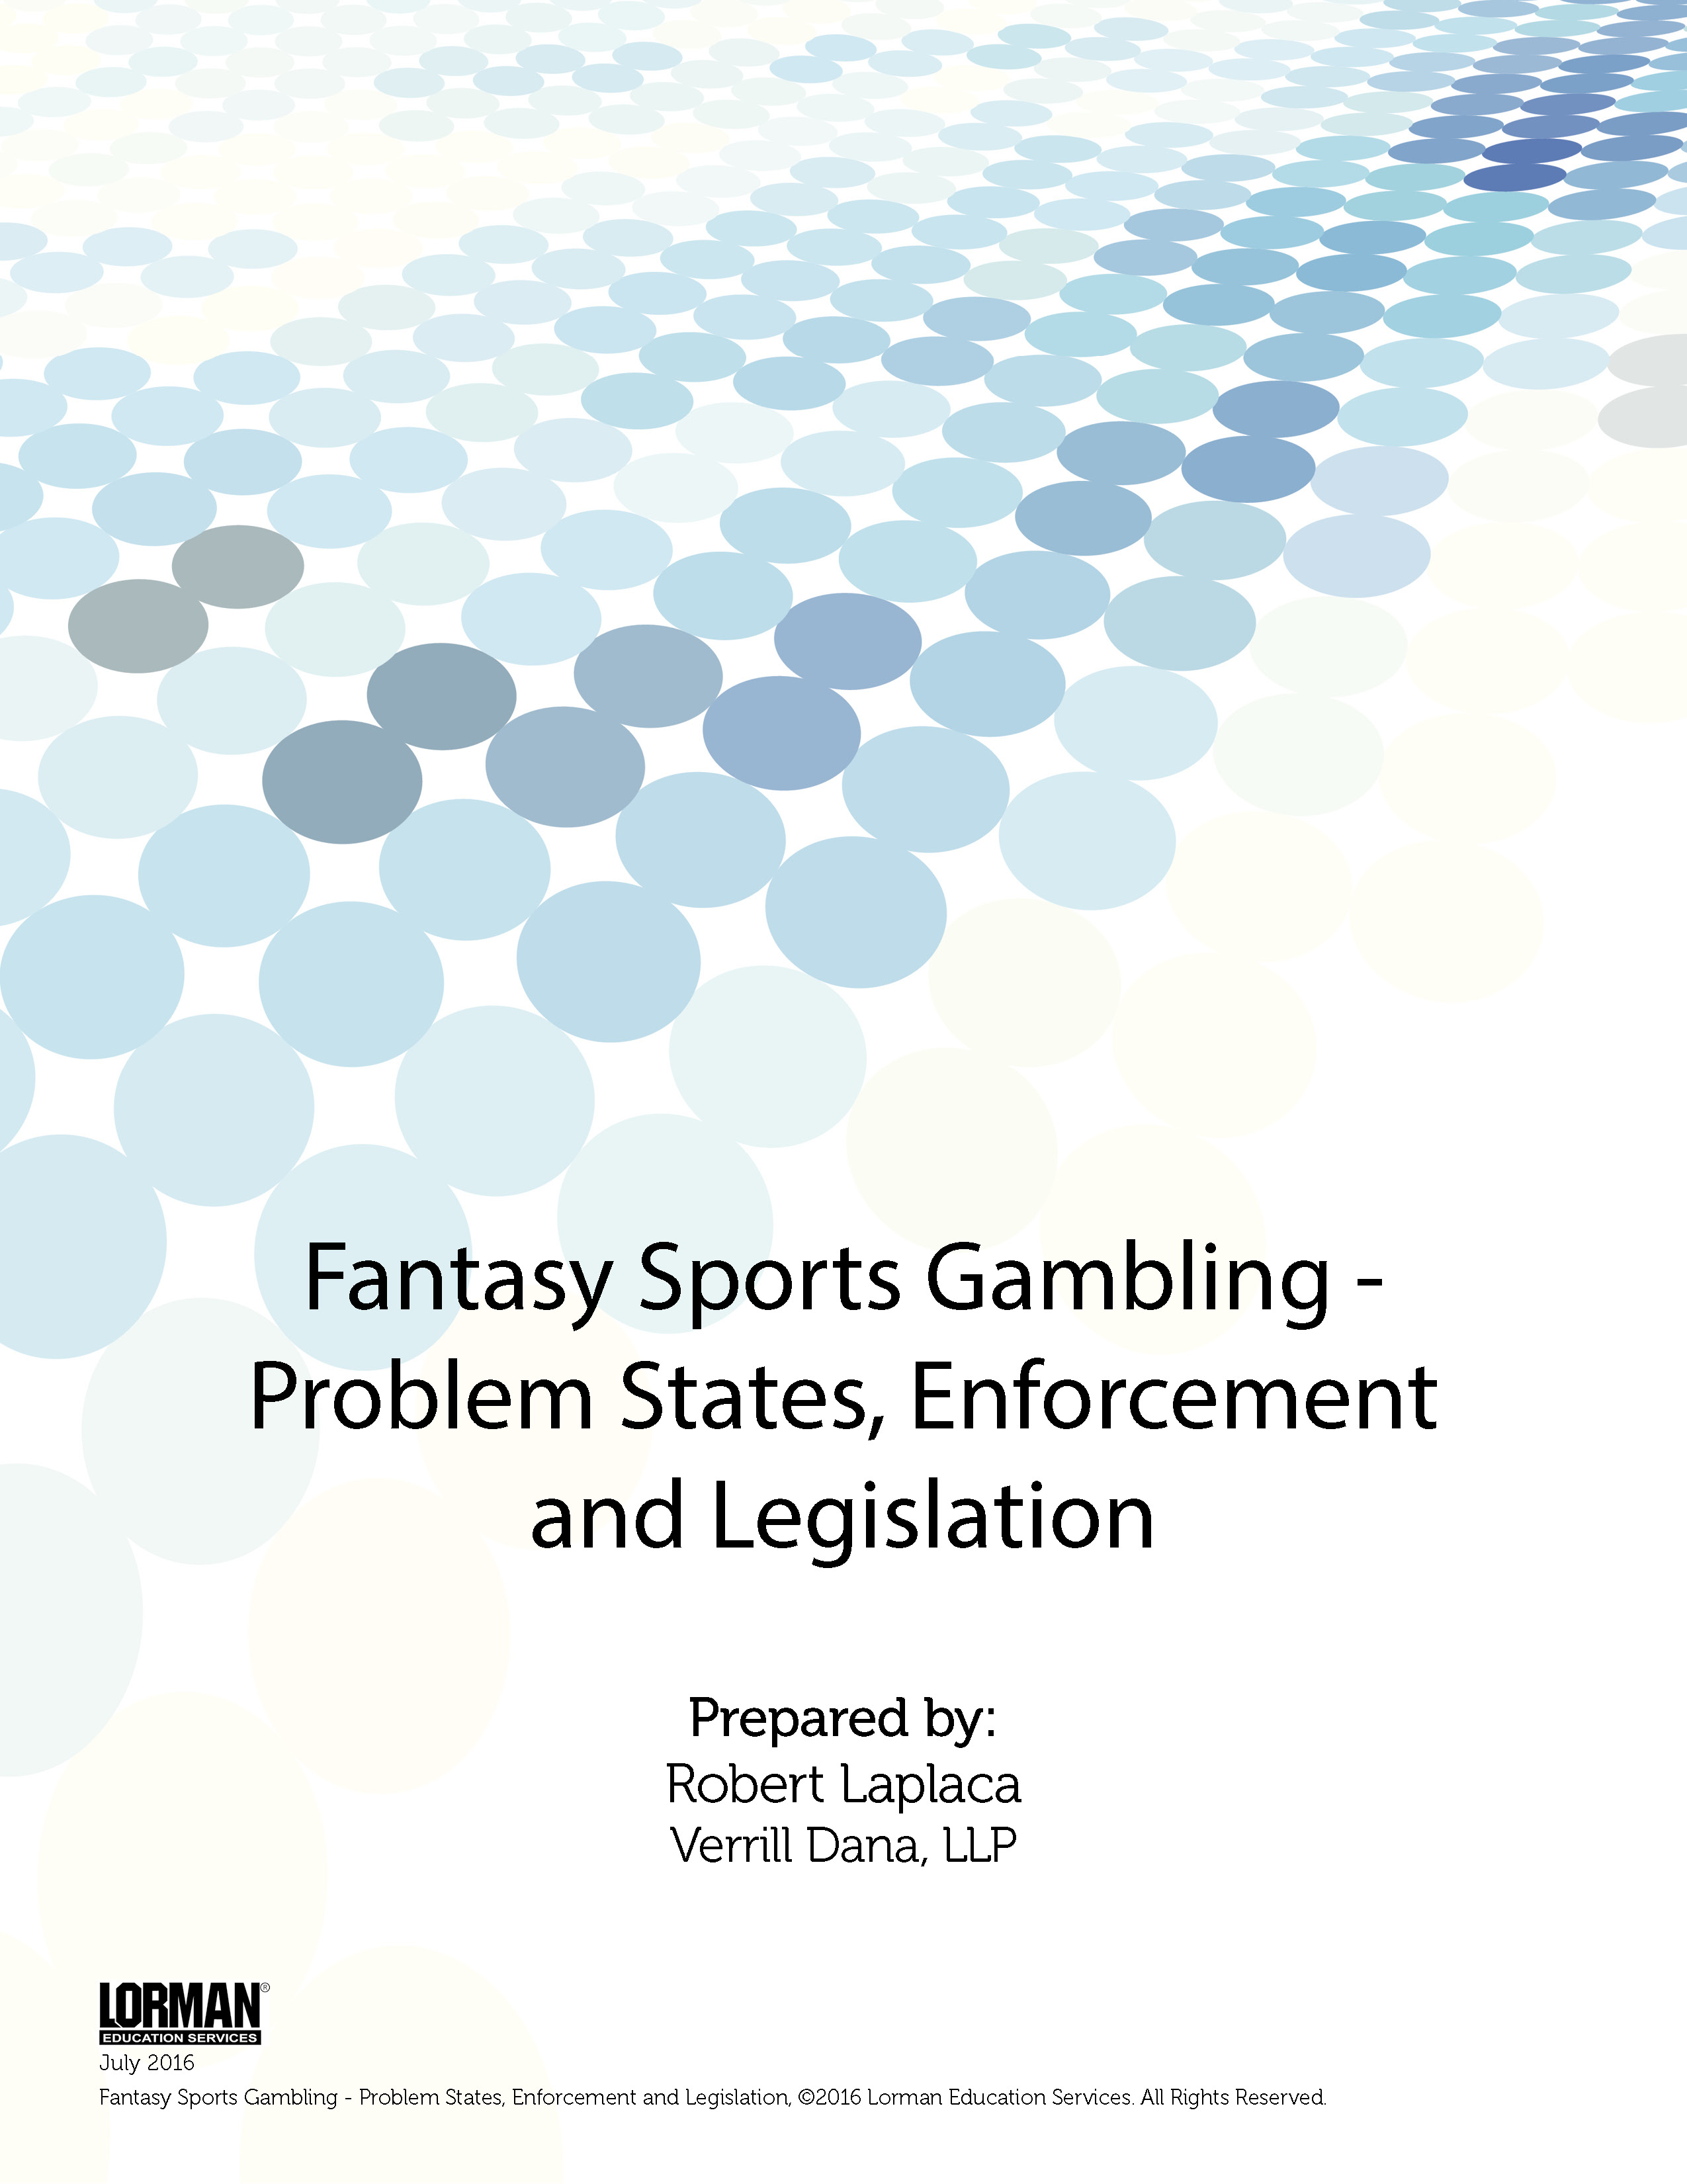 Fantasy Sports Gambling - Problem States, Enforcement and Legislation